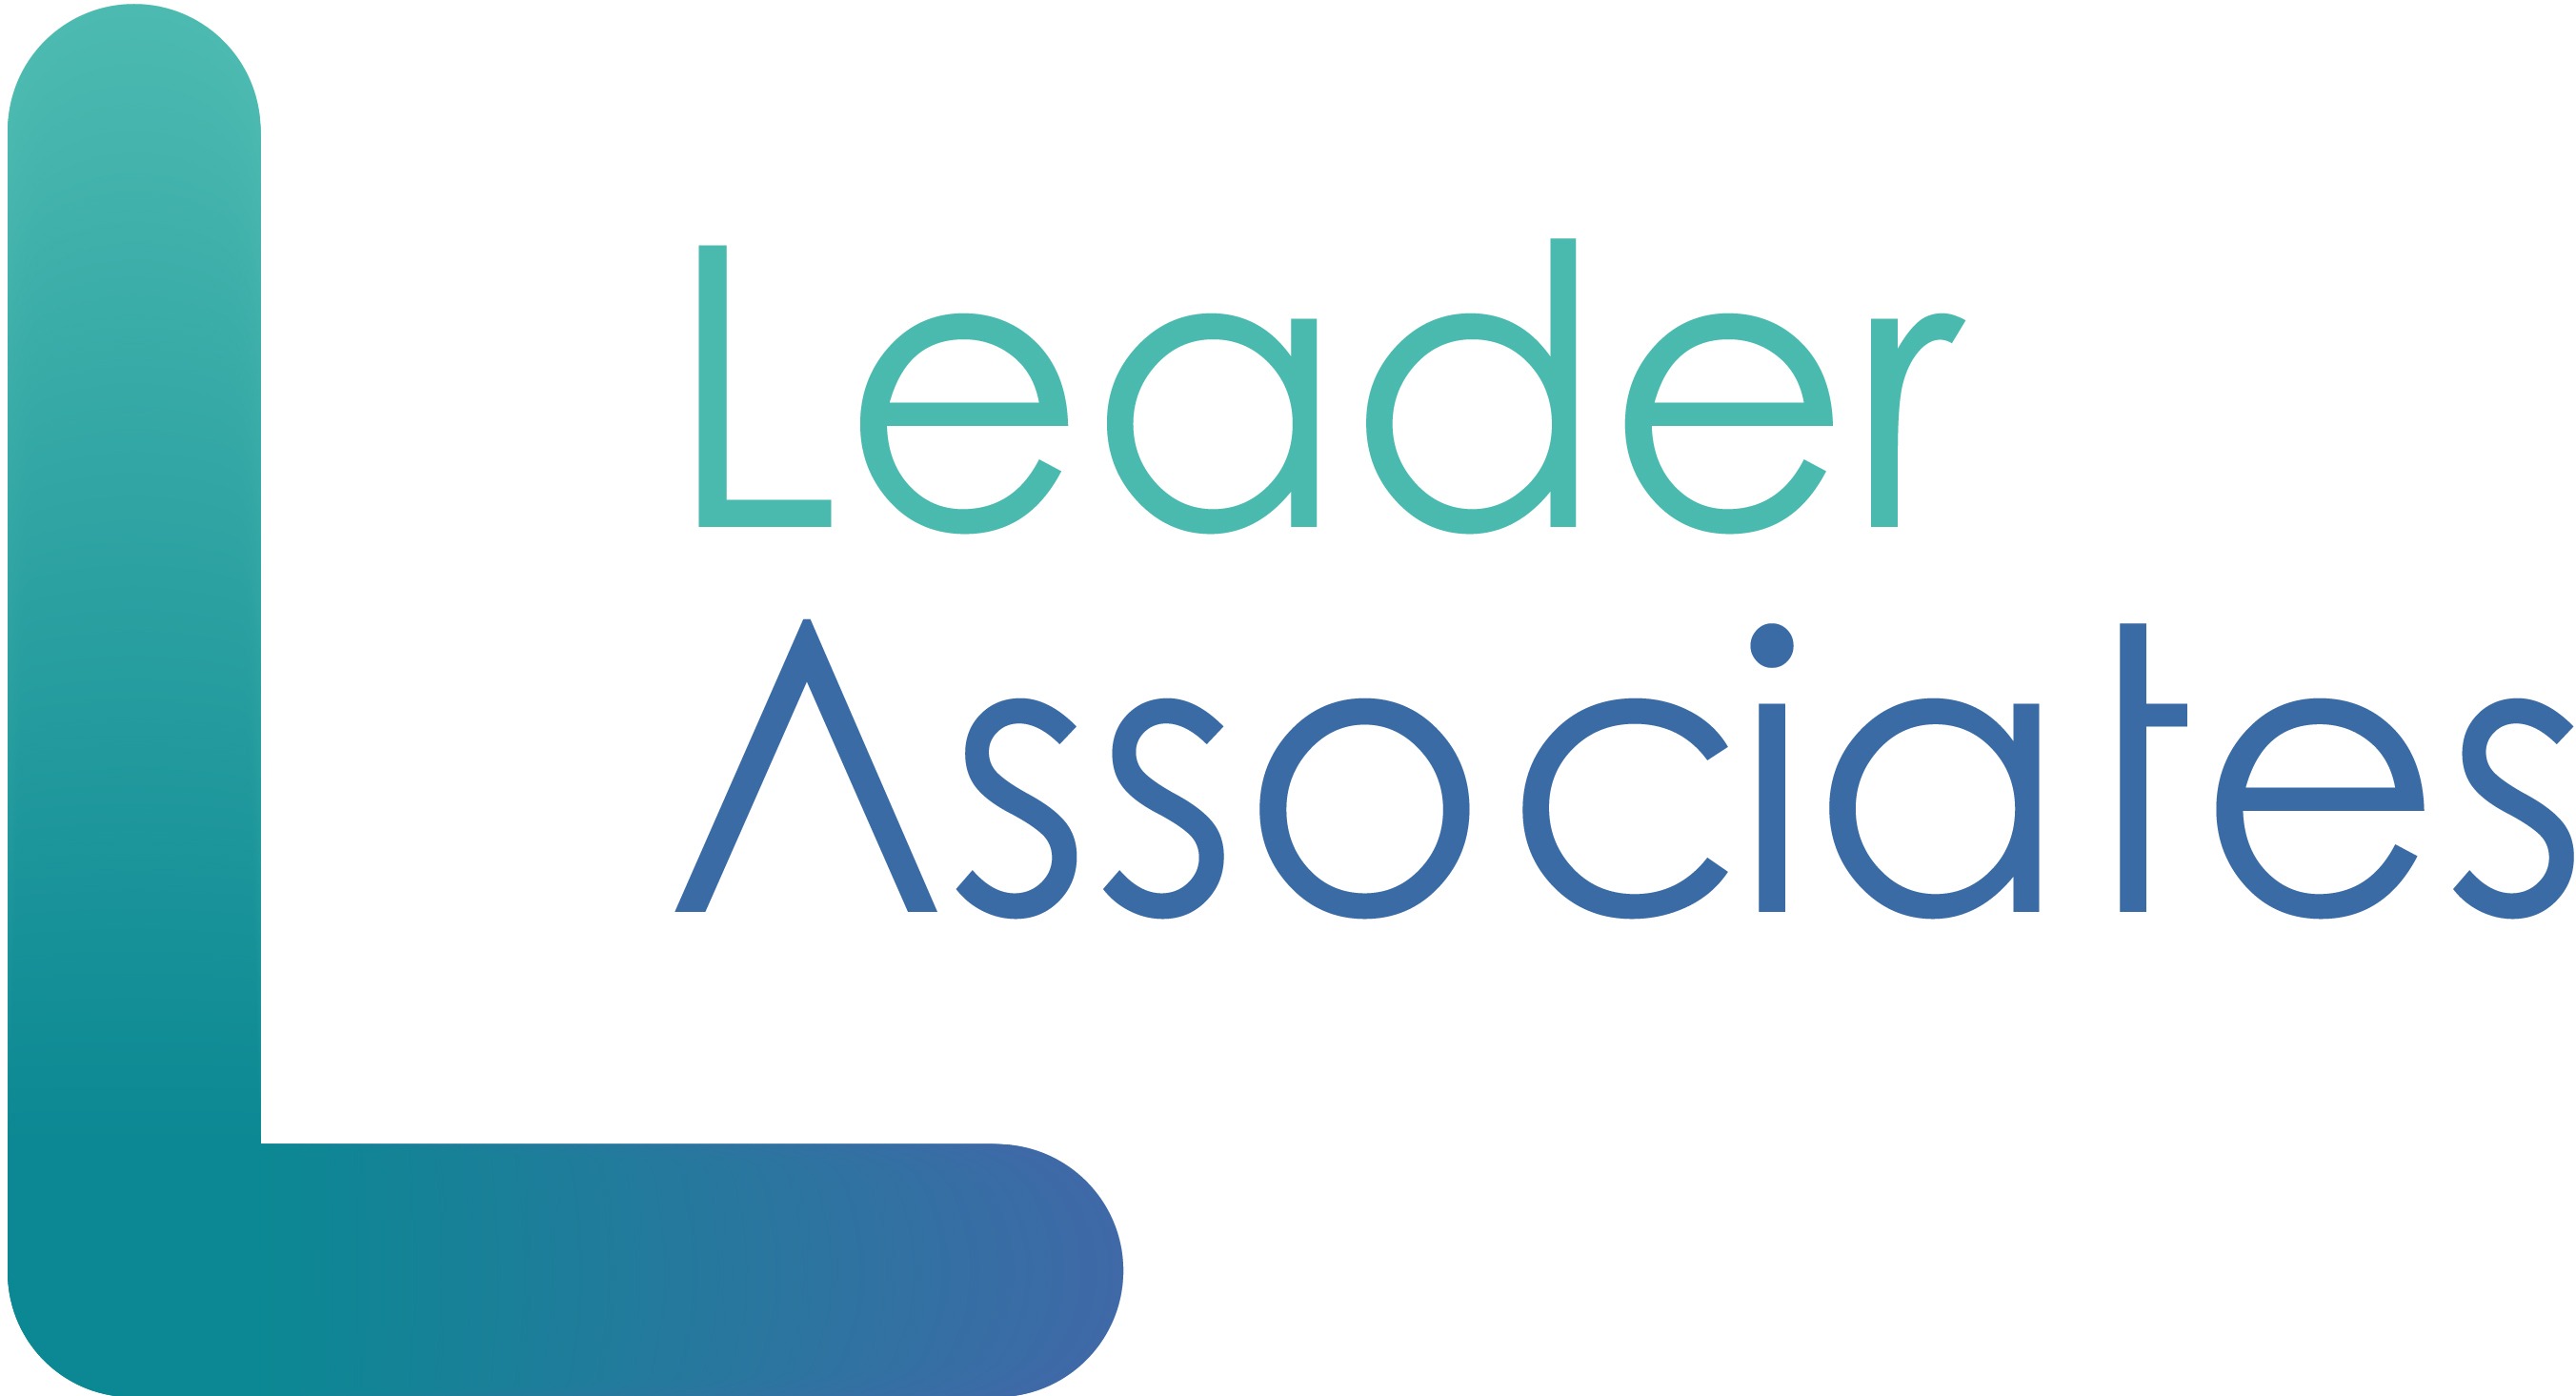 Leader Associates